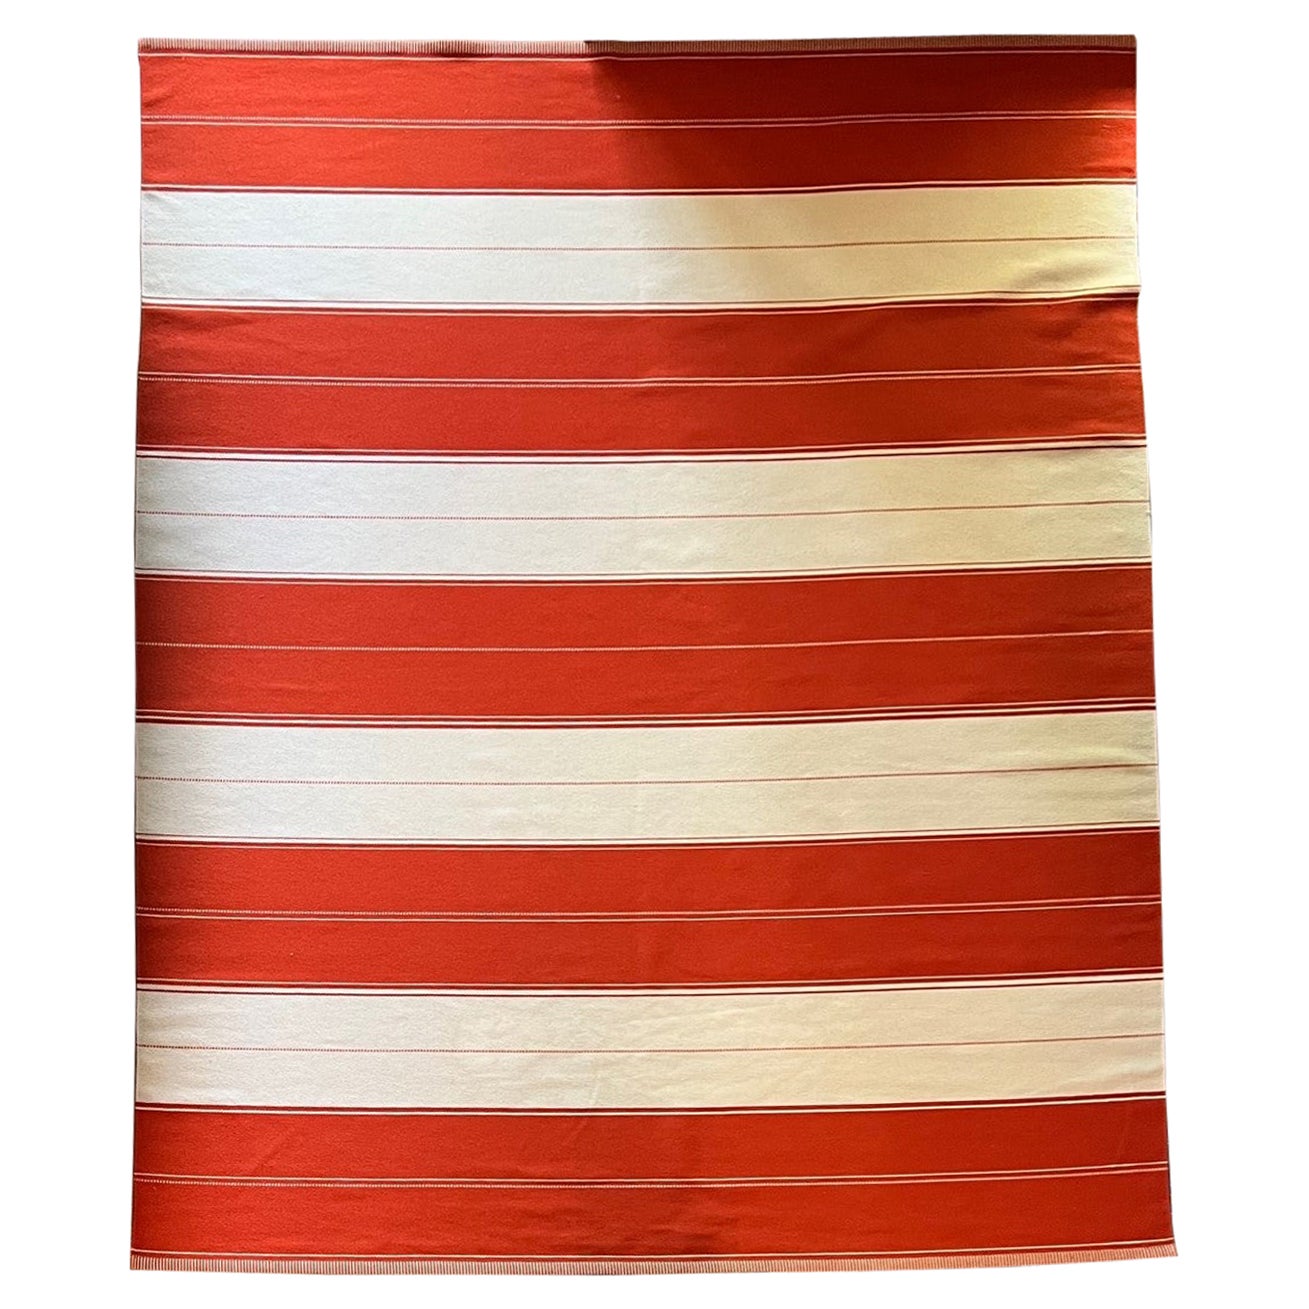 Striking Orange and White Wool Striped Rug by Swedish Rug Maker Kasthall